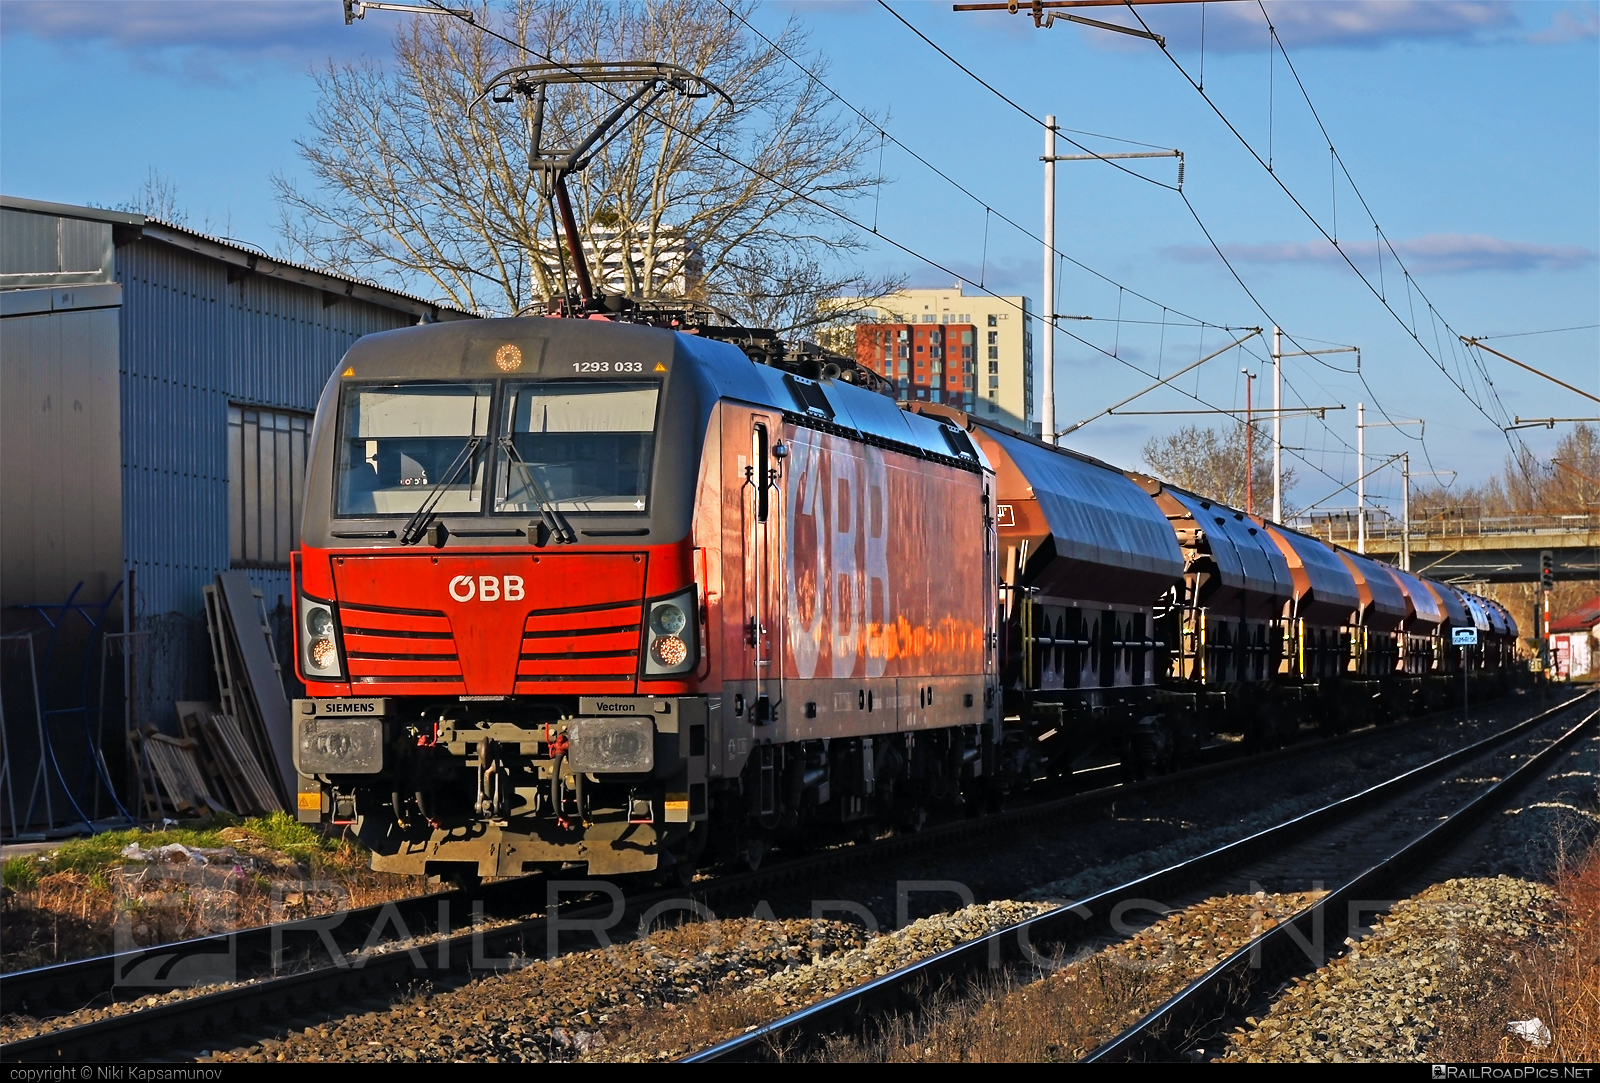 Siemens Vectron MS - 1293 033 operated by Rail Cargo Austria AG #hopperwagon #obb #osterreichischebundesbahnen #rcw #siemens #siemensVectron #siemensVectronMS #vectron #vectronMS